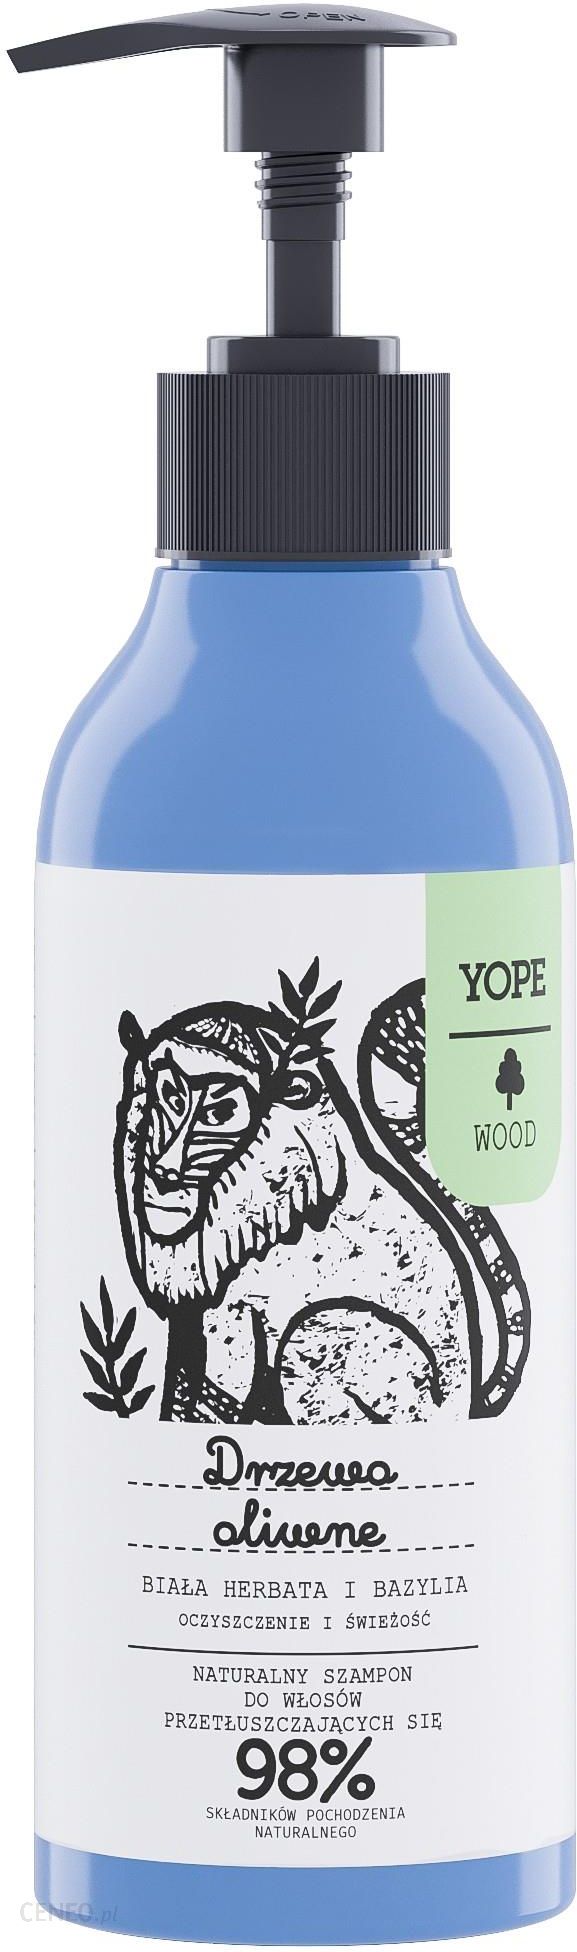 yope szampon do wlosow superpharm